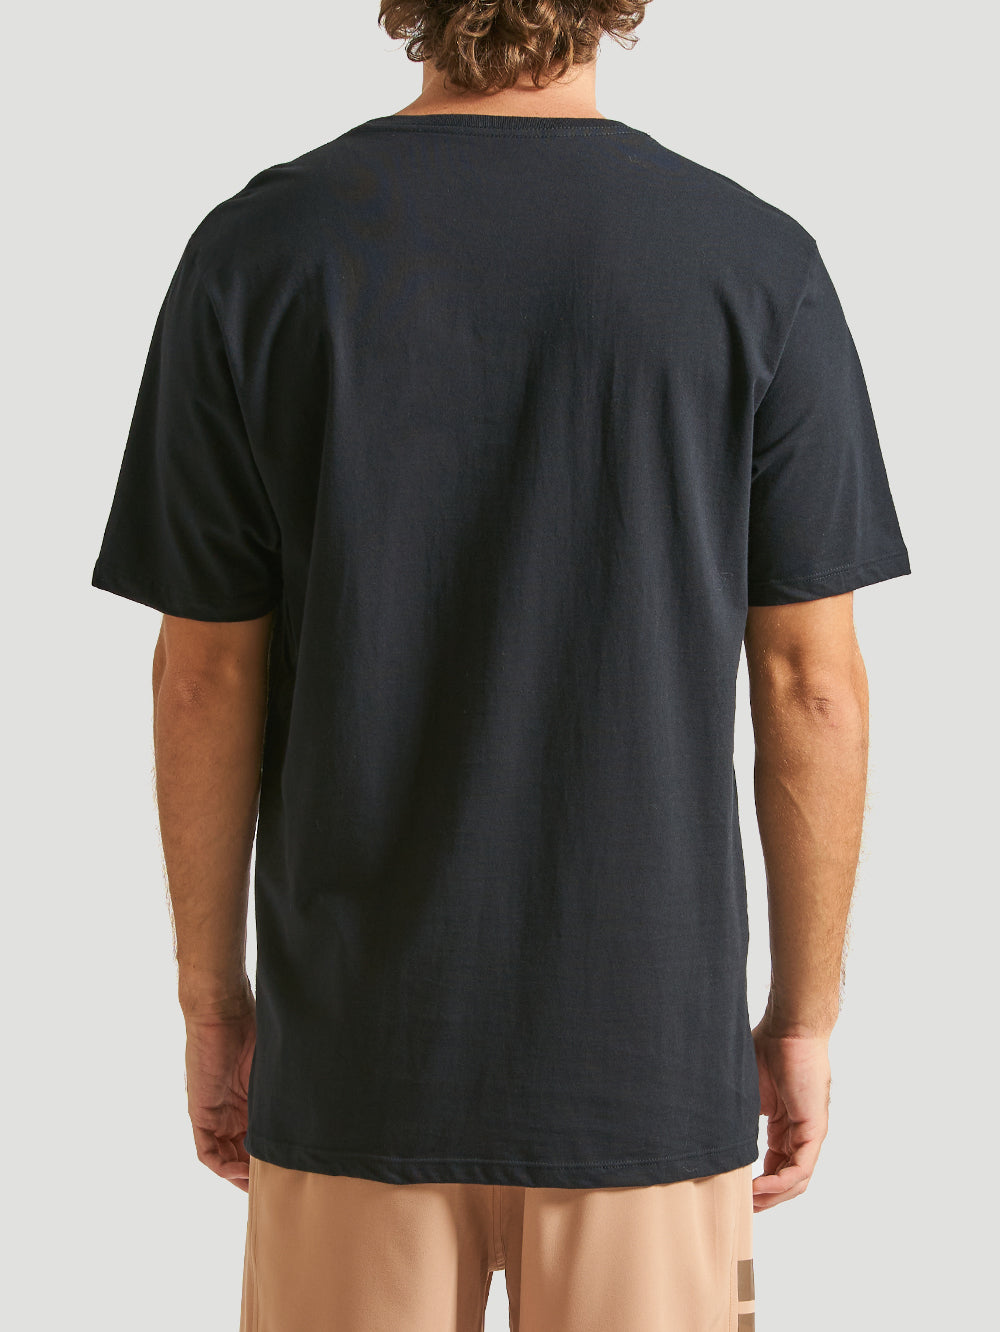 Camiseta Hurley ICON Preto